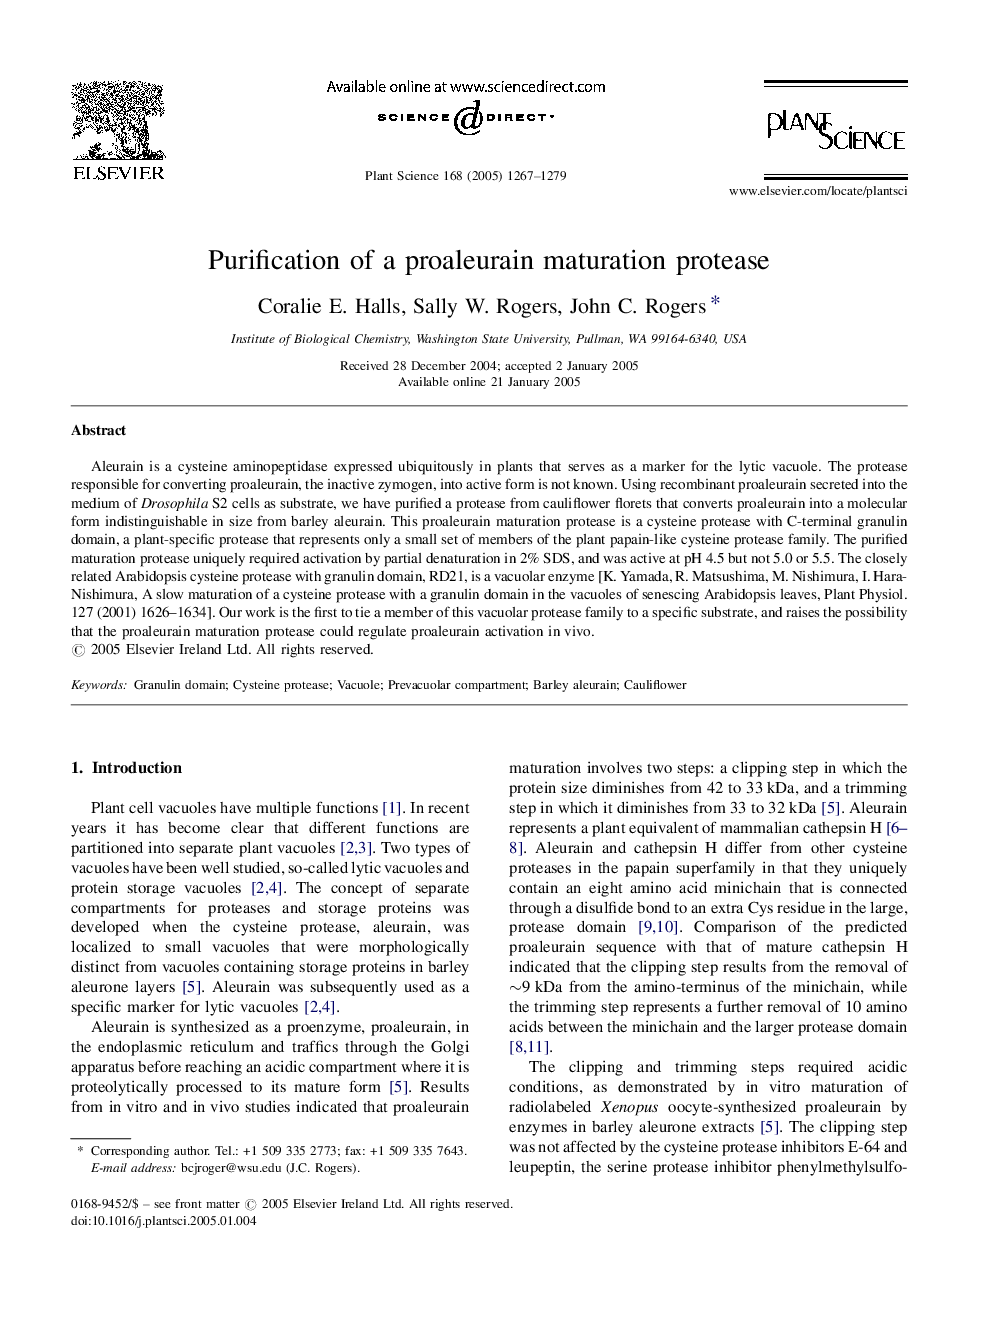 Purification of a proaleurain maturation protease